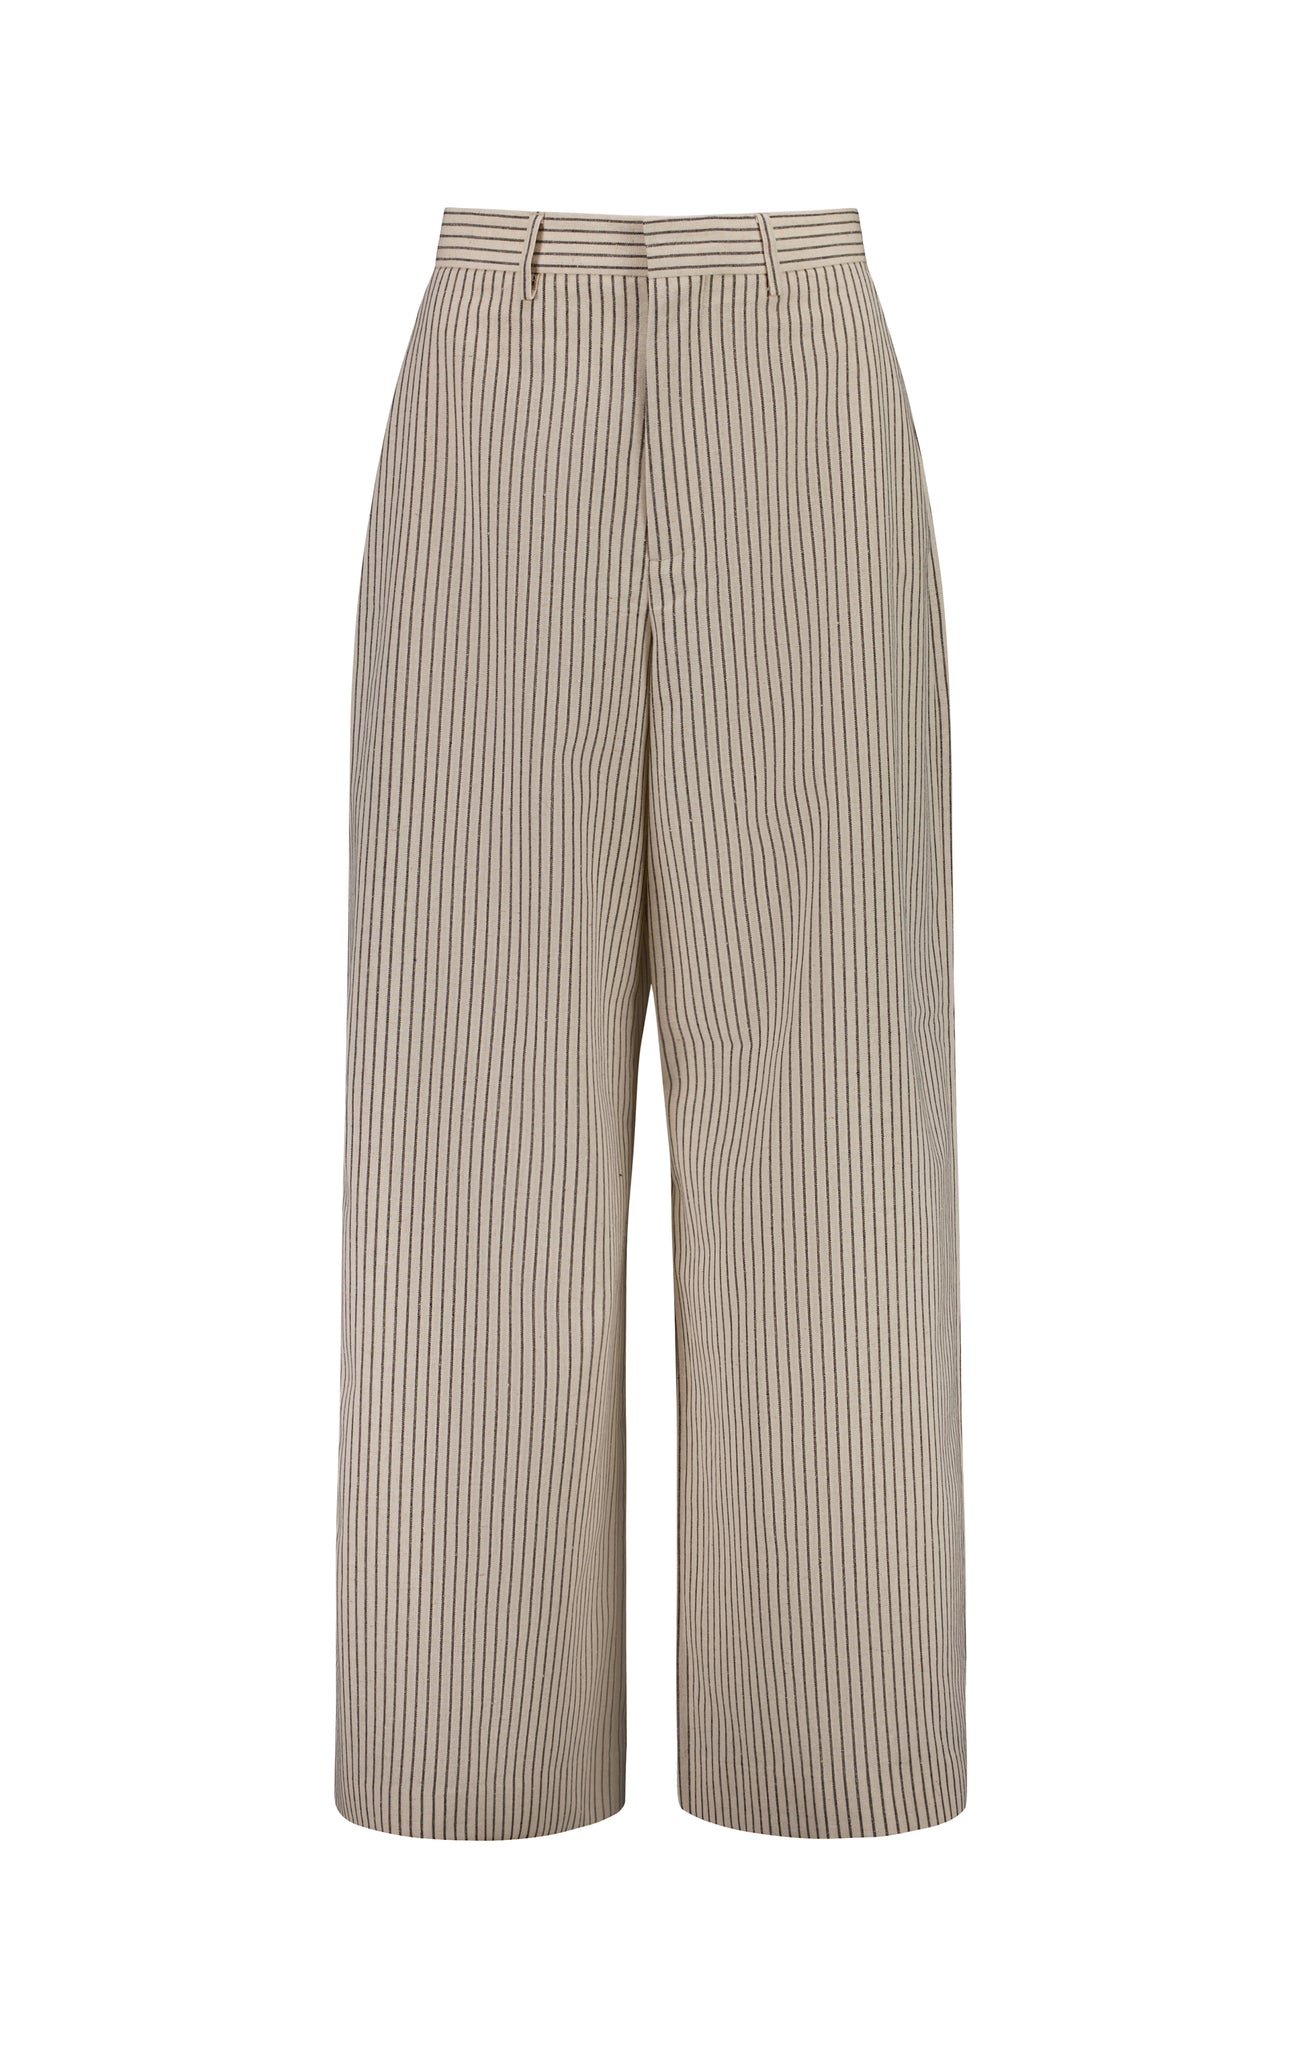 Hayes Linen Stripe Pant